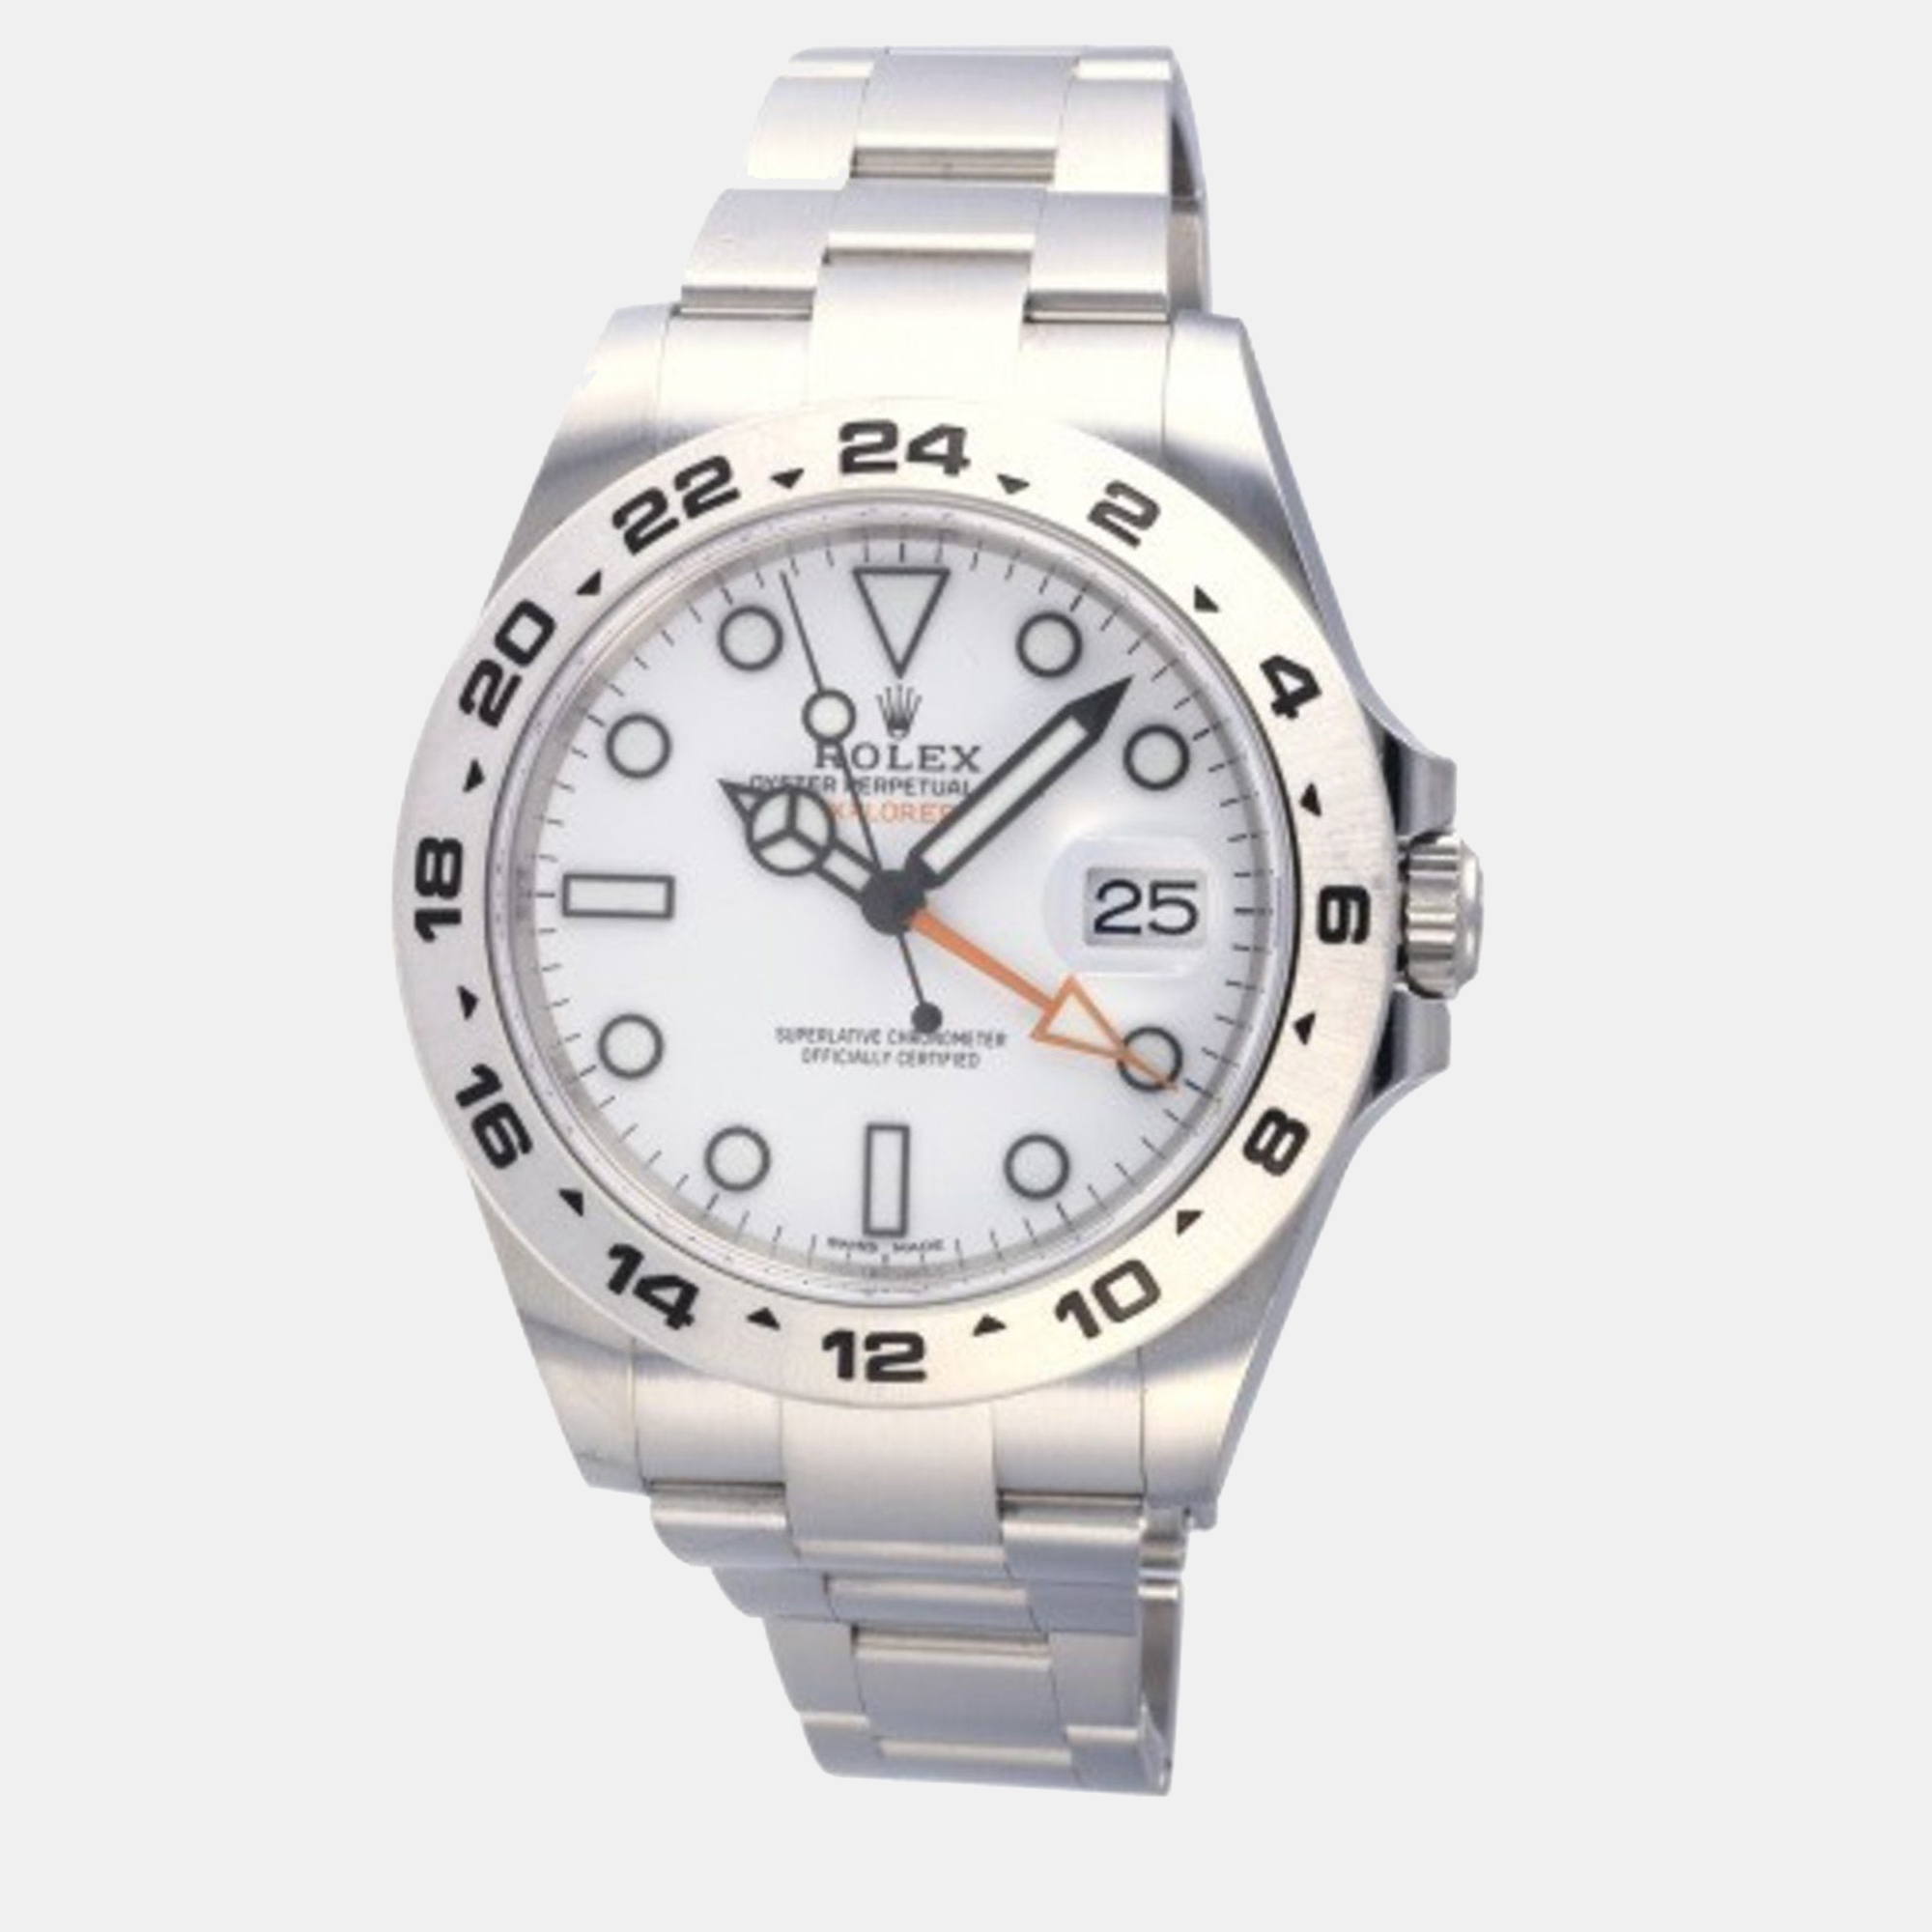 Rolex white stainless steel explorer ii 216570 automatic men's wristwatch 42 mm